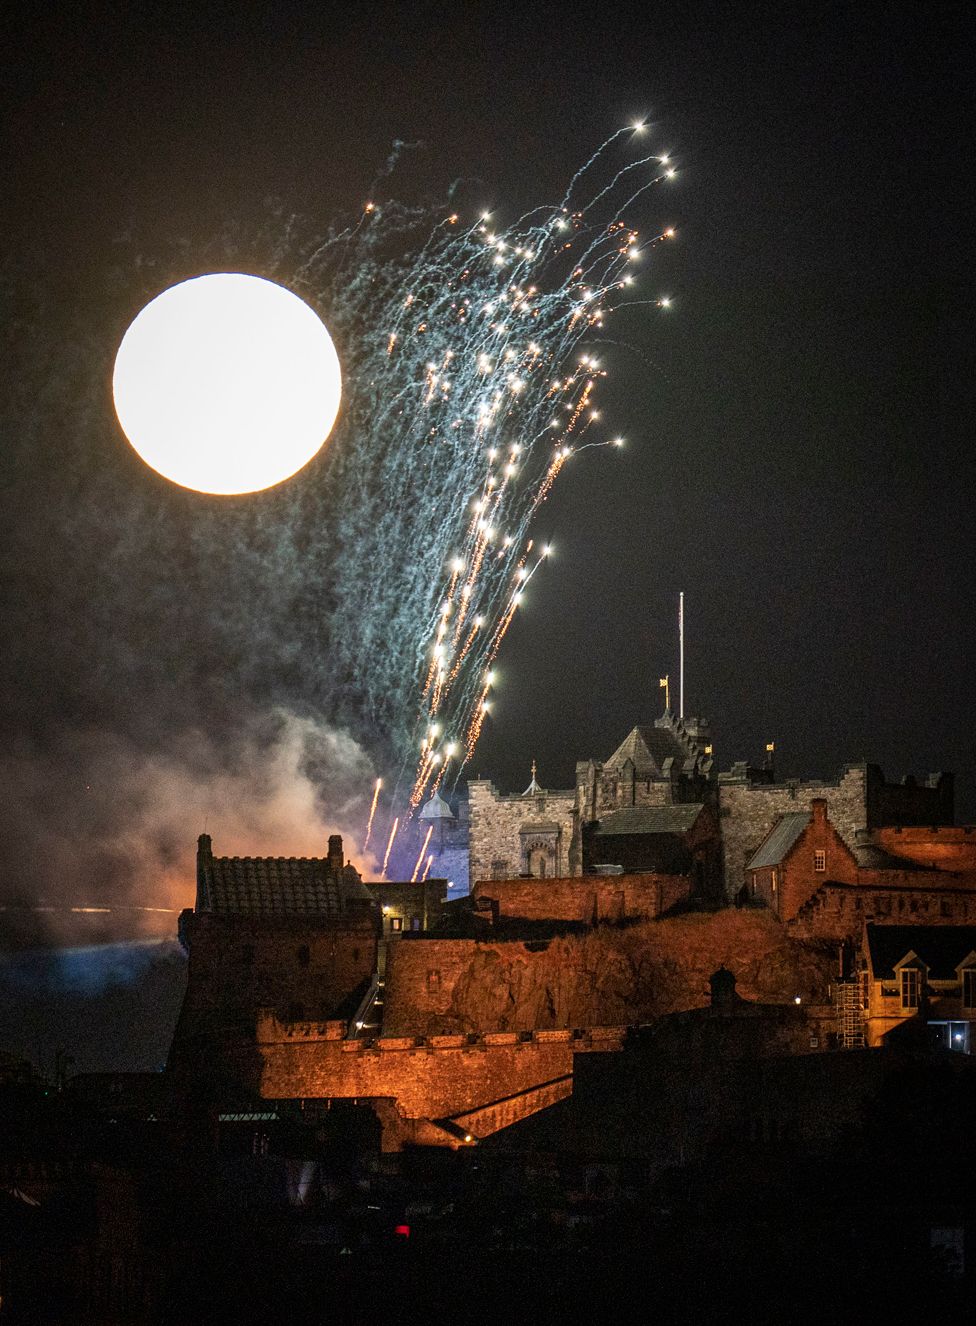 The moon shines behind Edinburgh Castle during the Royal Edinburgh Military Tattoo fireworks display